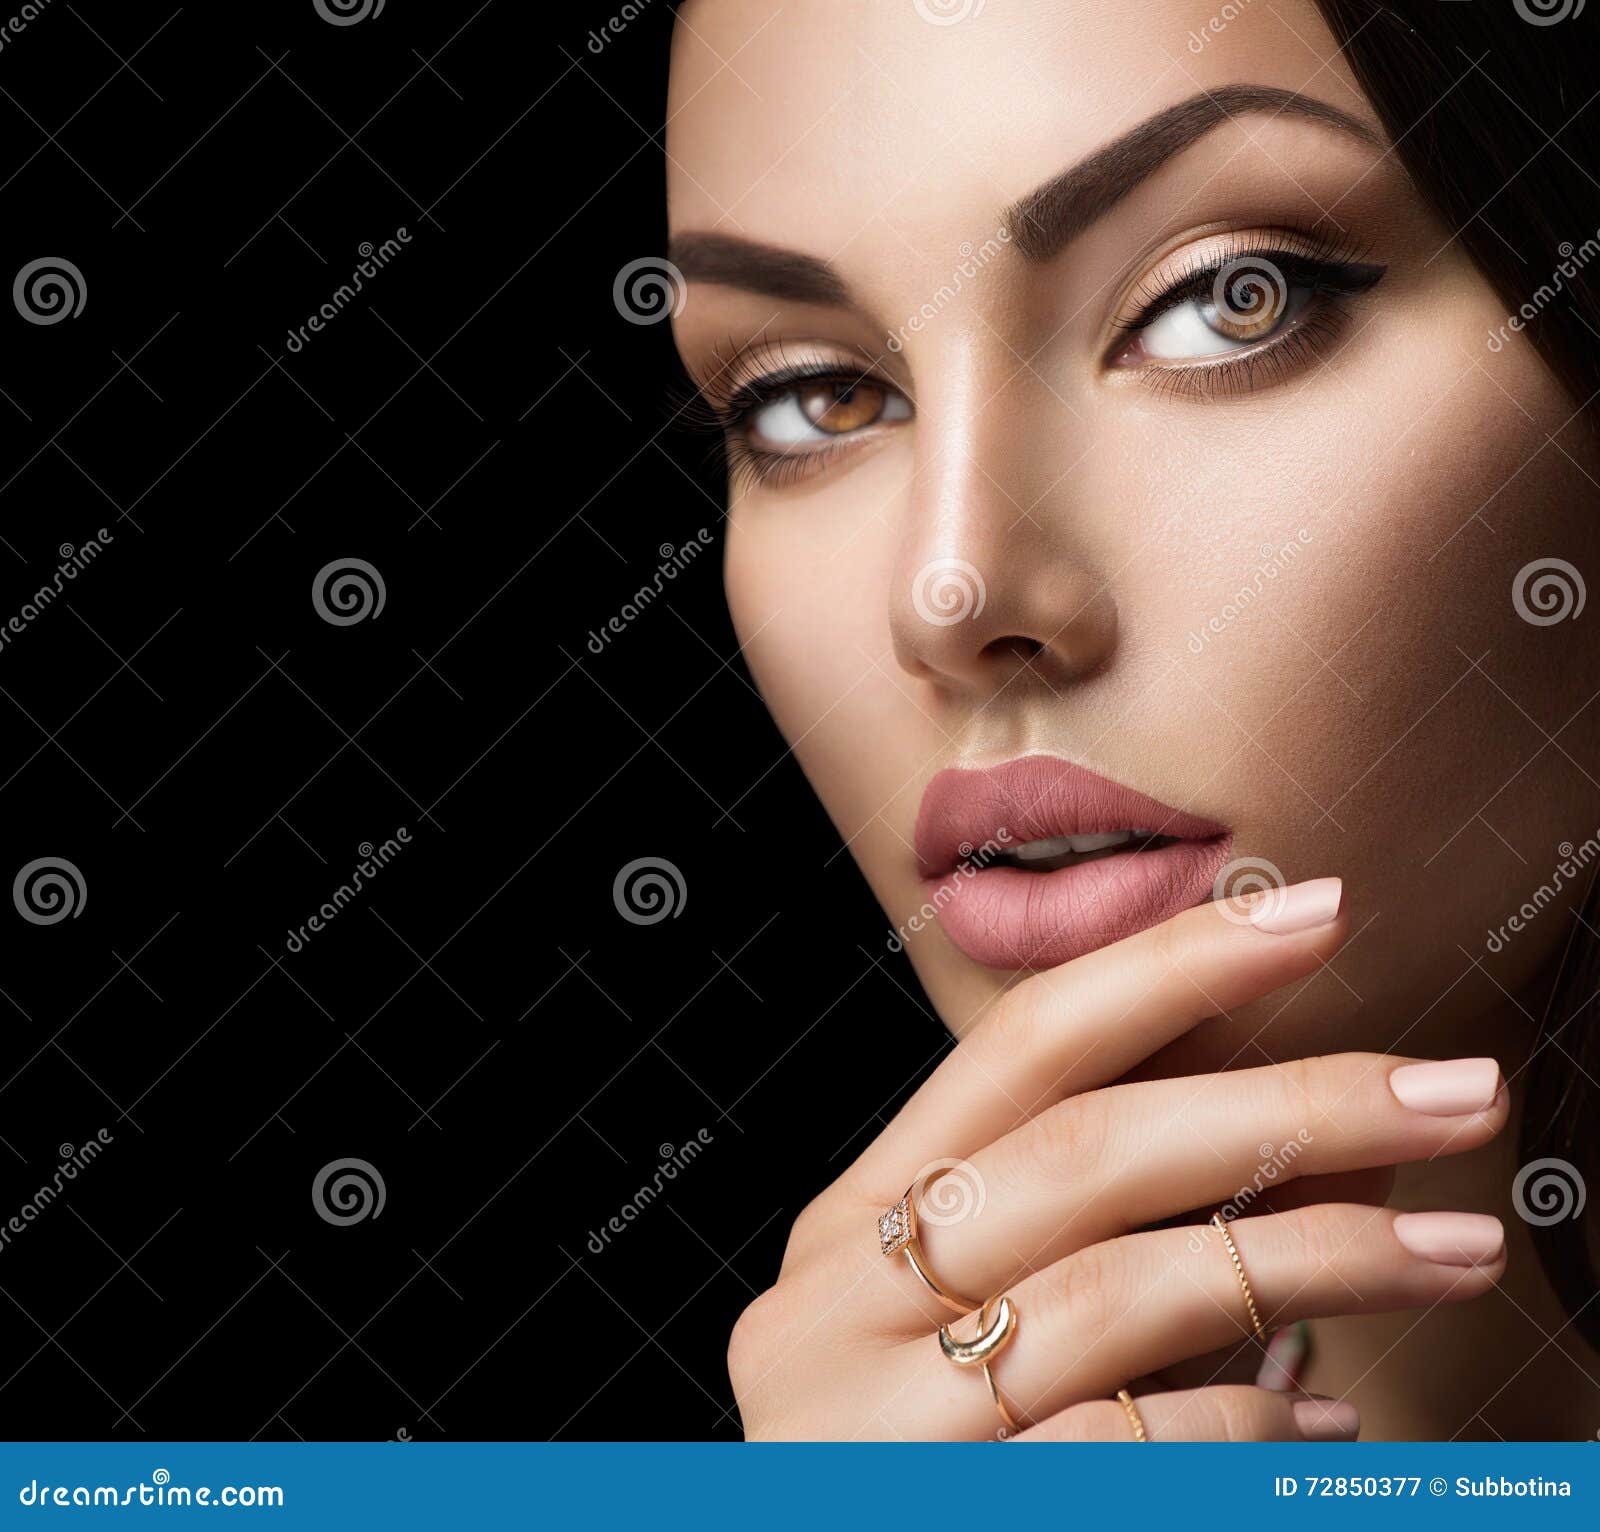 perfect woman lips with fashion natural beige matte lipstick